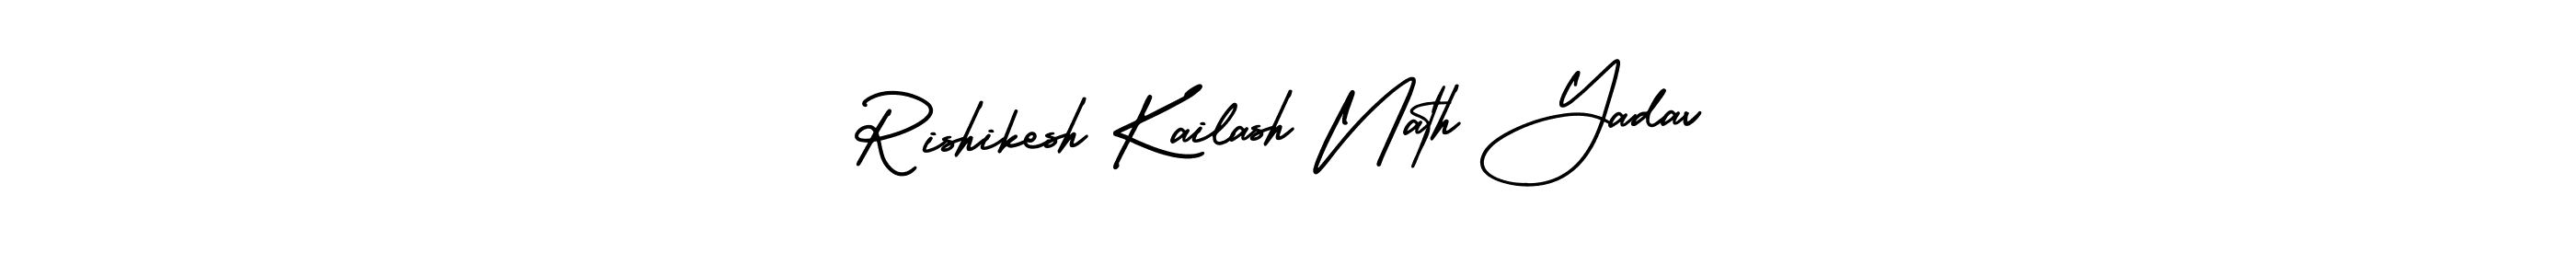 Best and Professional Signature Style for Rishikesh Kailash Nath Yadav. AmerikaSignatureDemo-Regular Best Signature Style Collection. Rishikesh Kailash Nath Yadav signature style 3 images and pictures png